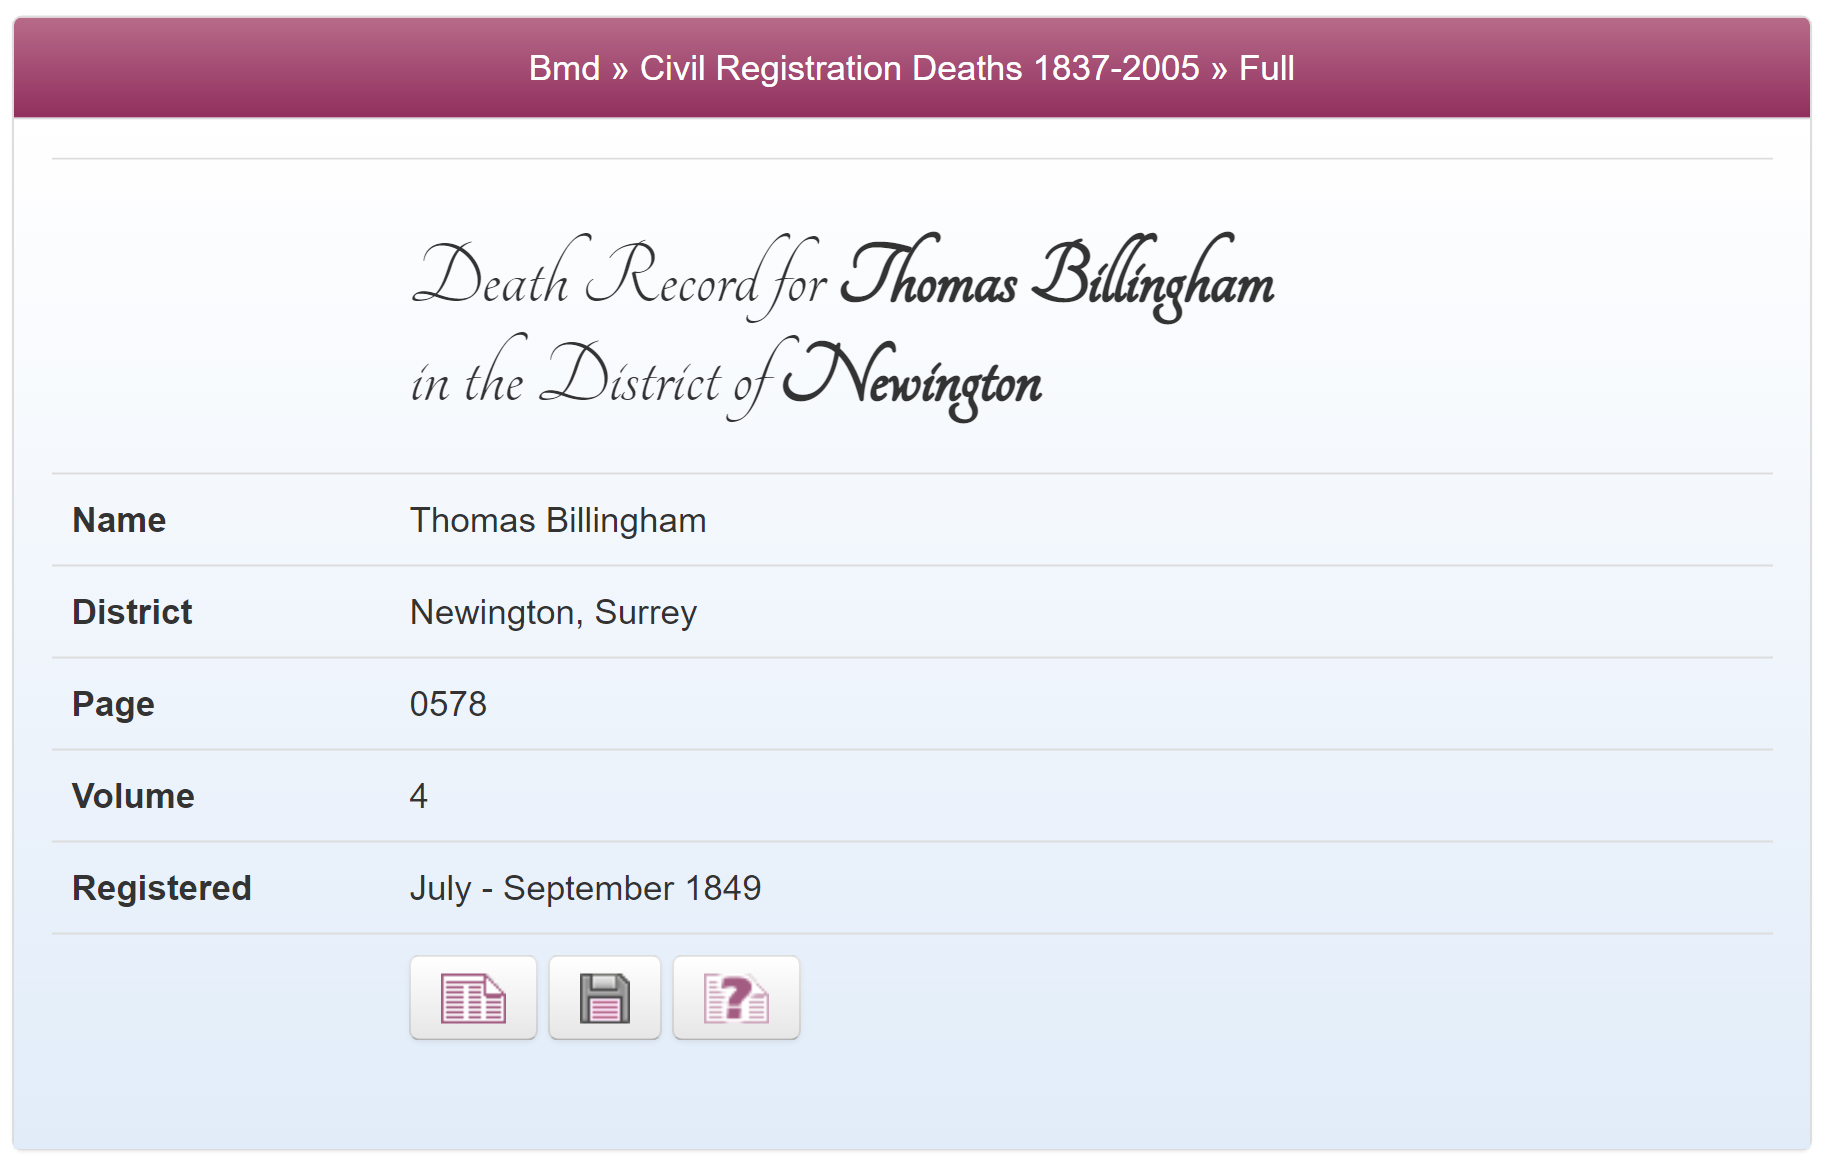 Thomas Billingham's Death Record